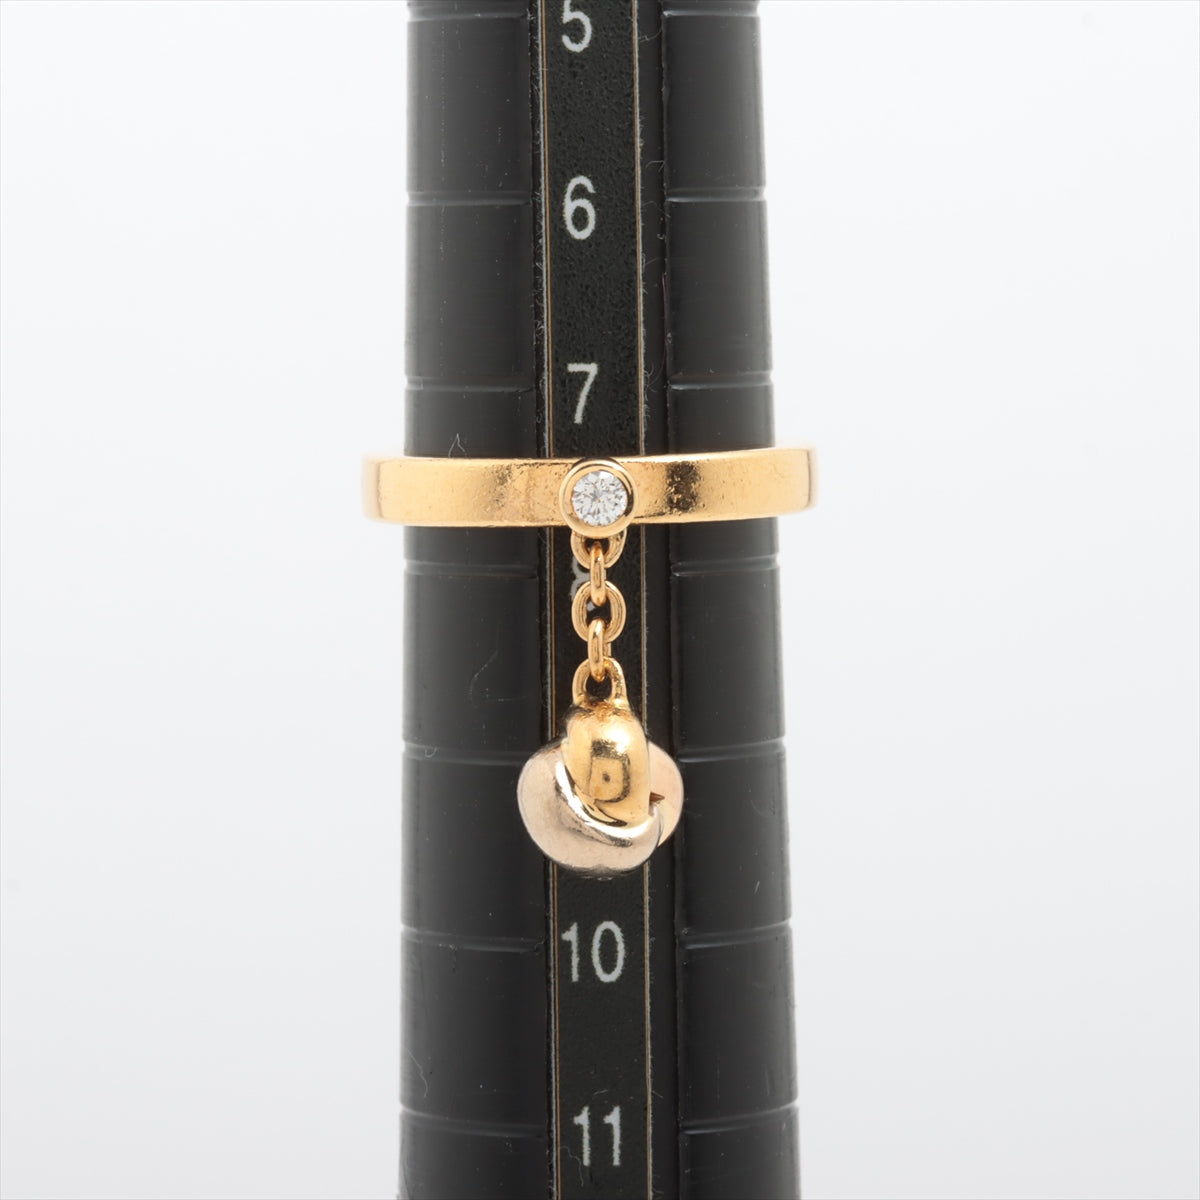 Cartier Baby Trinity Ball diamond rings 750(YG×PG×WG) 5.2g 48